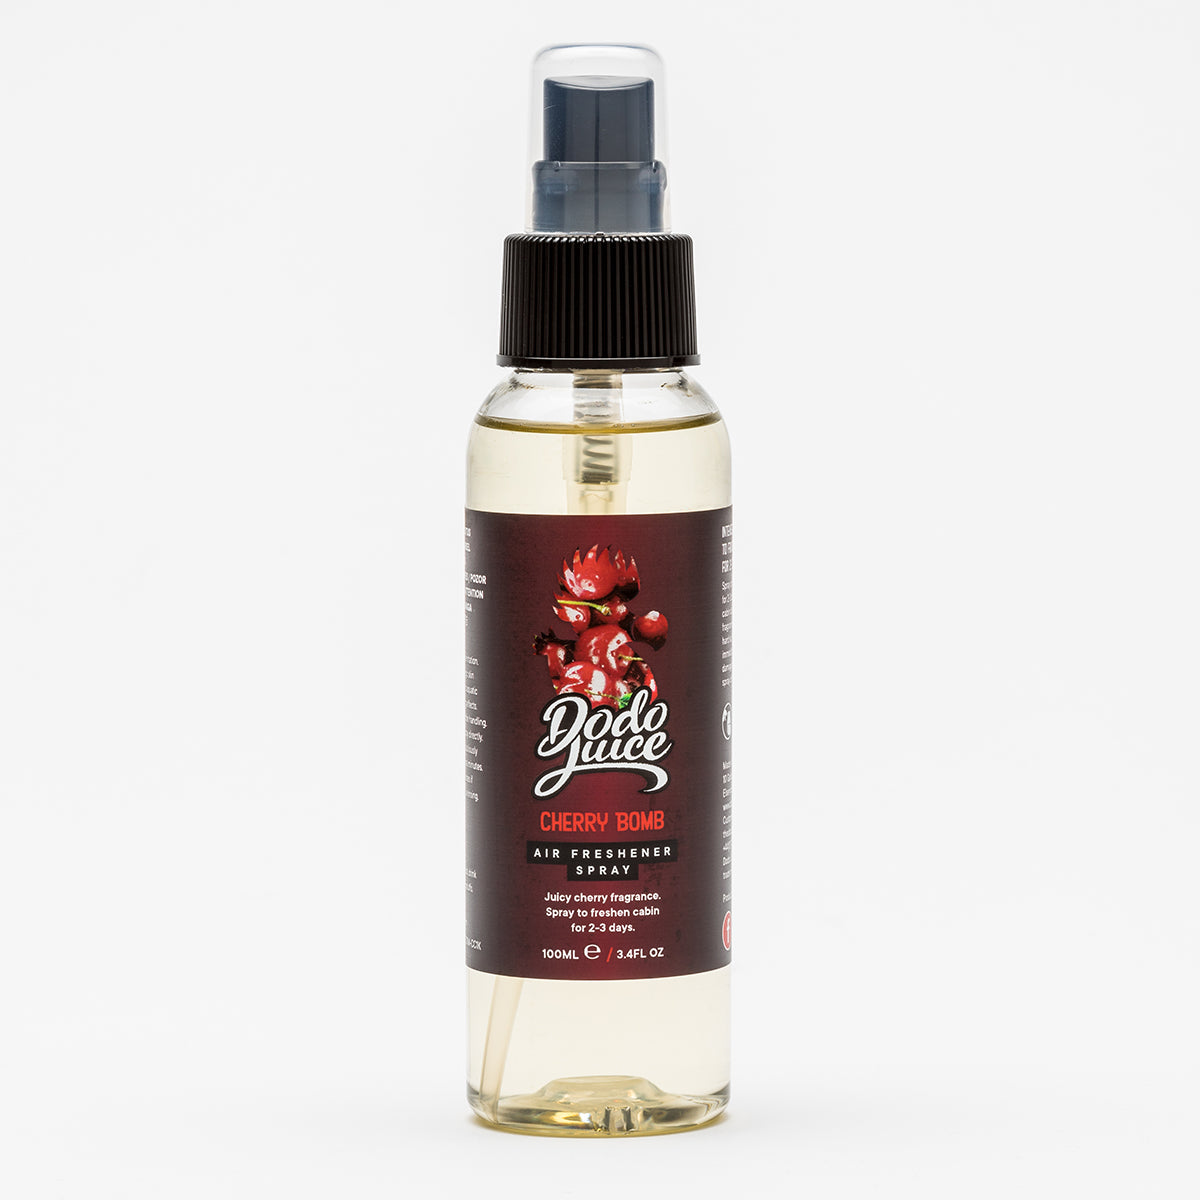 Cherry Bomb 100ml - cherry fragrance air freshener spray HS 9616101000